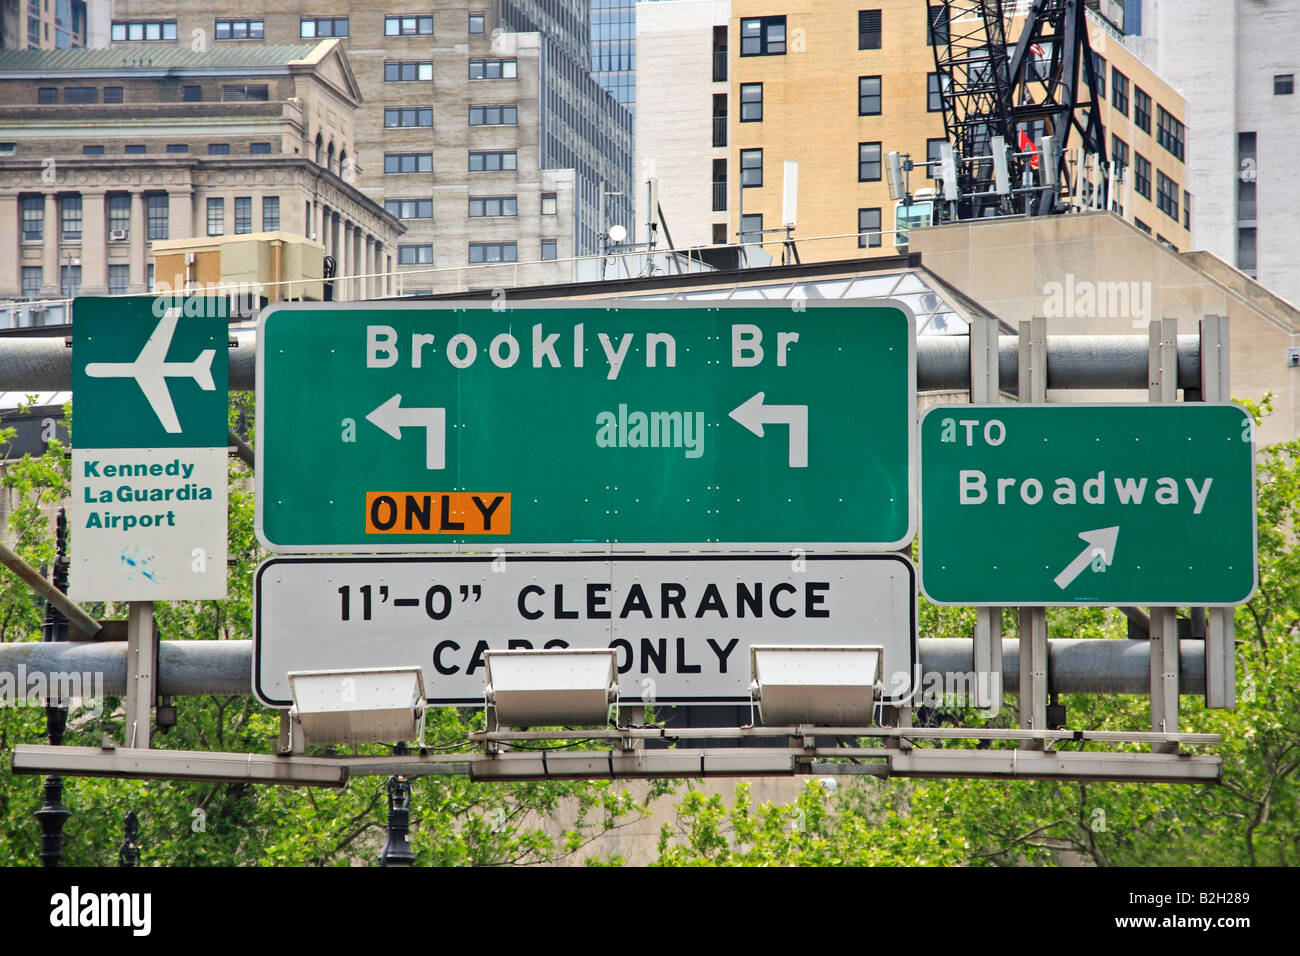 Brooklyn Bridge street sign - New York City, USA Stock Photo